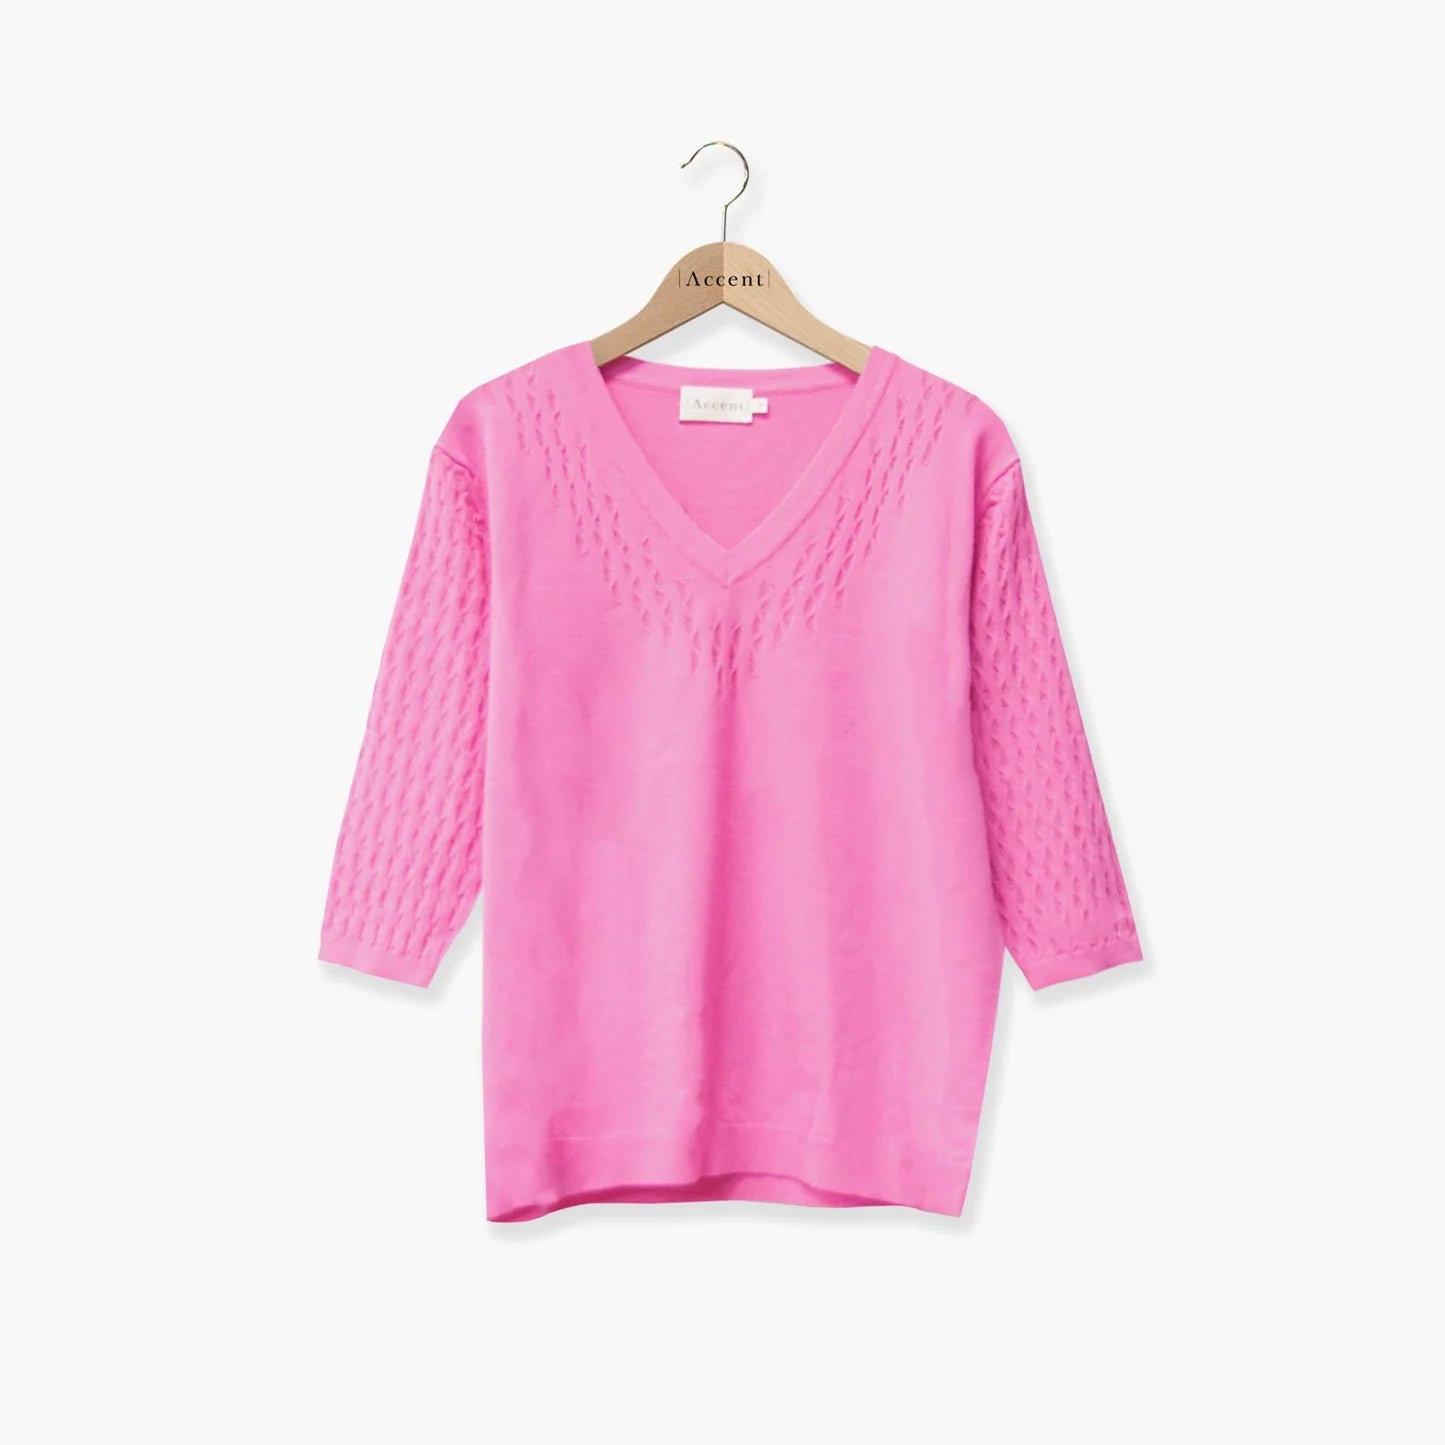 Pull Fuchia Accent Fashion ( Sombra/Pink )